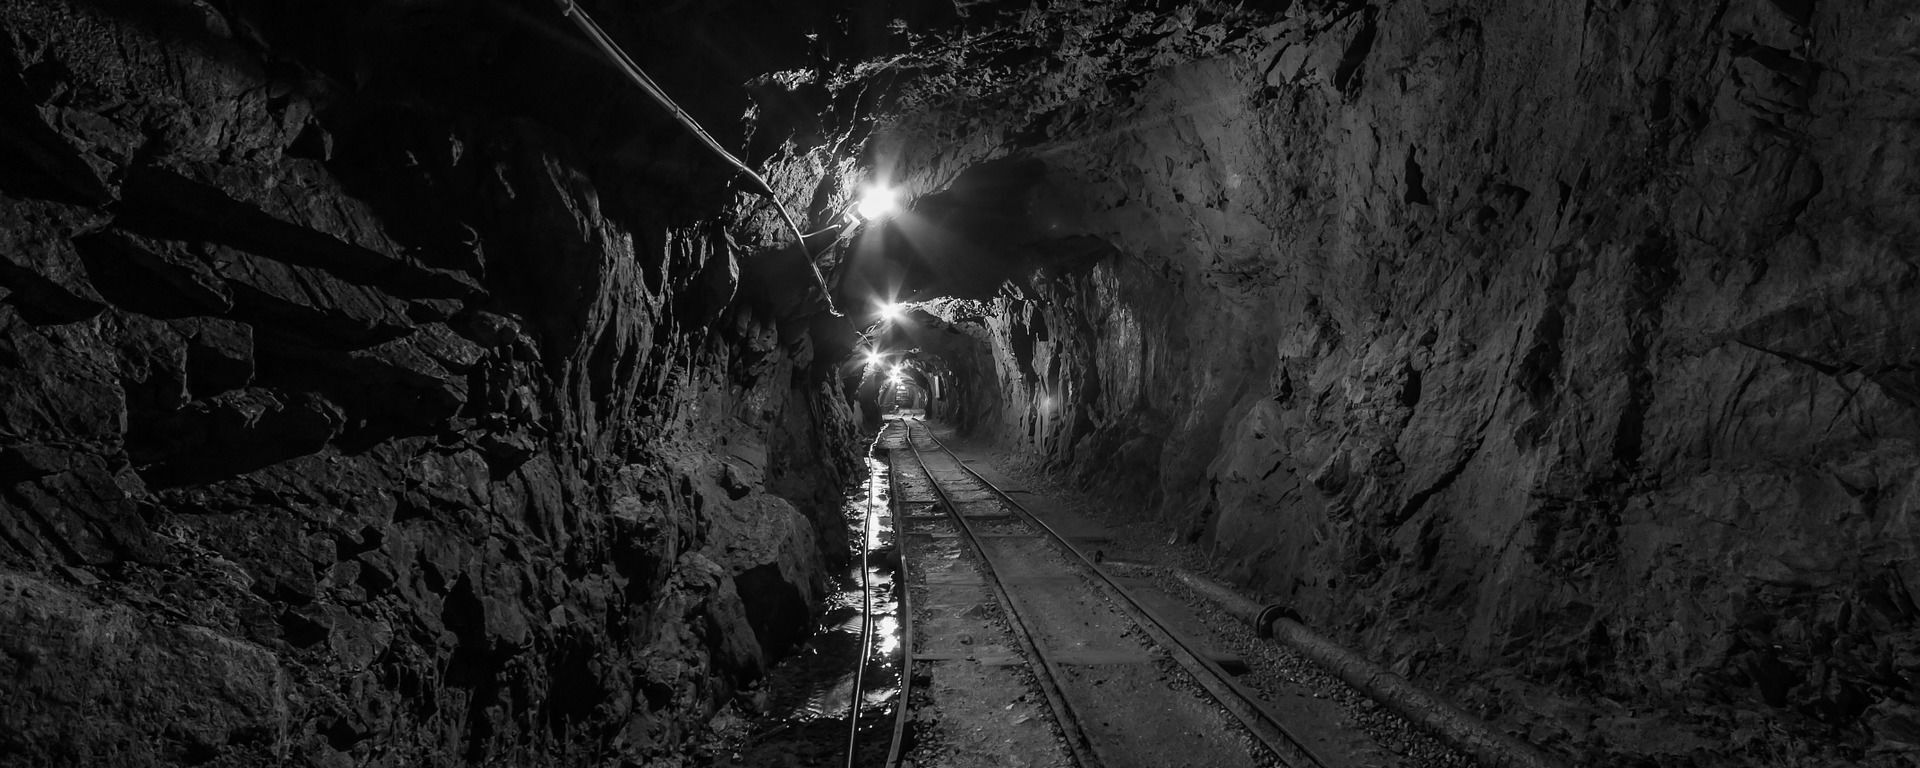 Un túnel en una mina - Sputnik Mundo, 1920, 04.12.2020